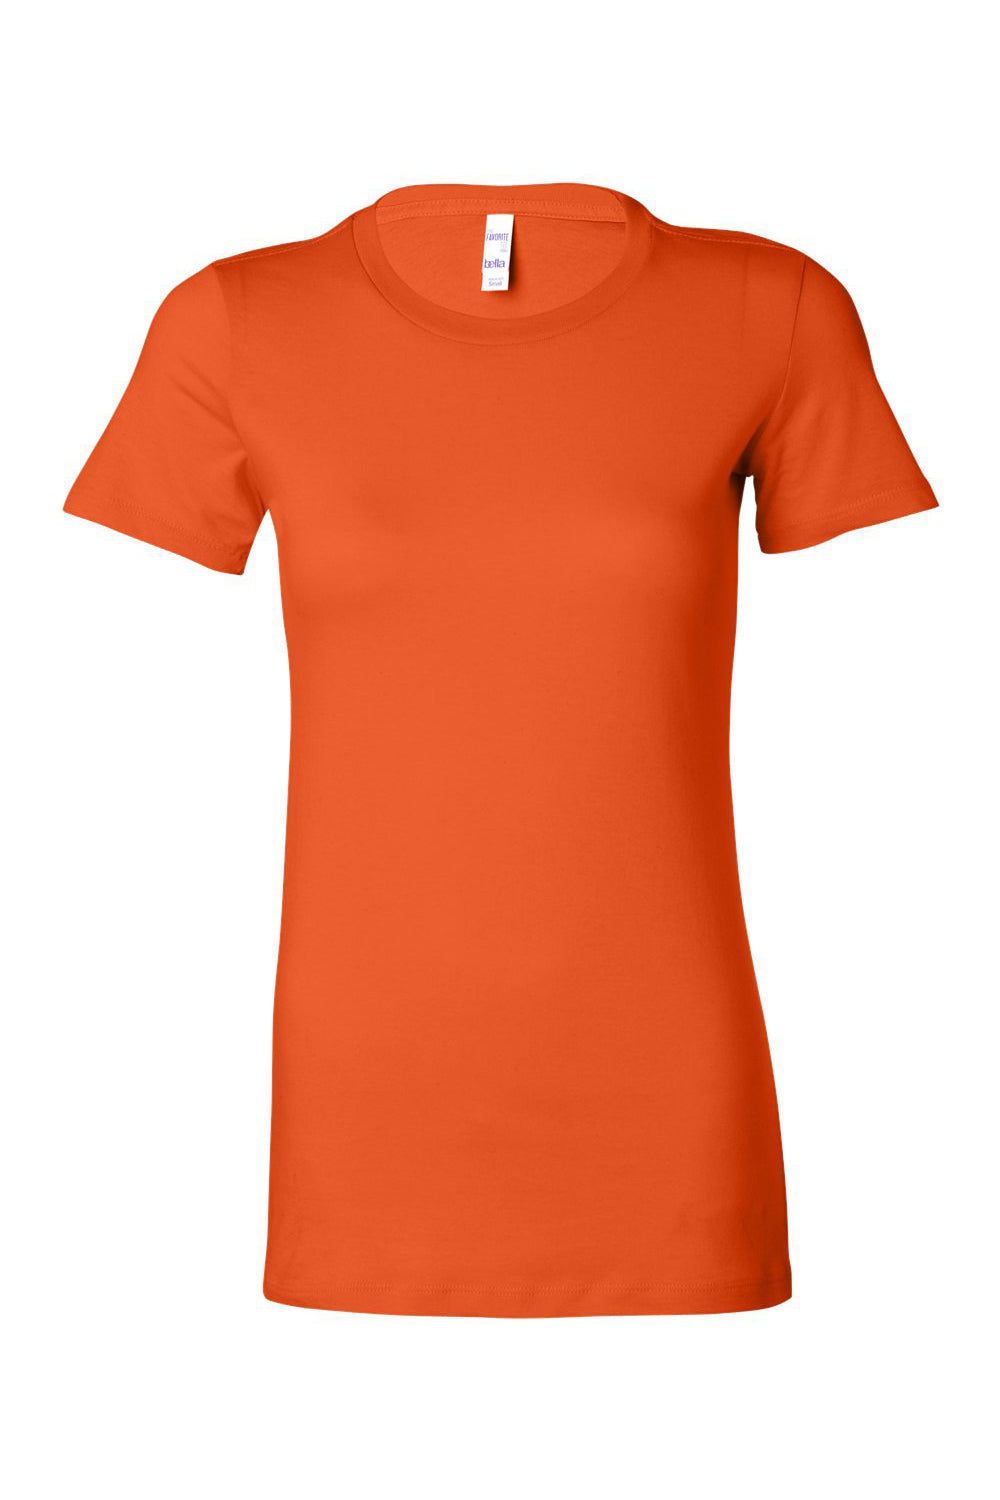 Bella + Canvas BC6004/6004 Womens The Favorite Short Sleeve Crewneck T-Shirt Orange Flat Front